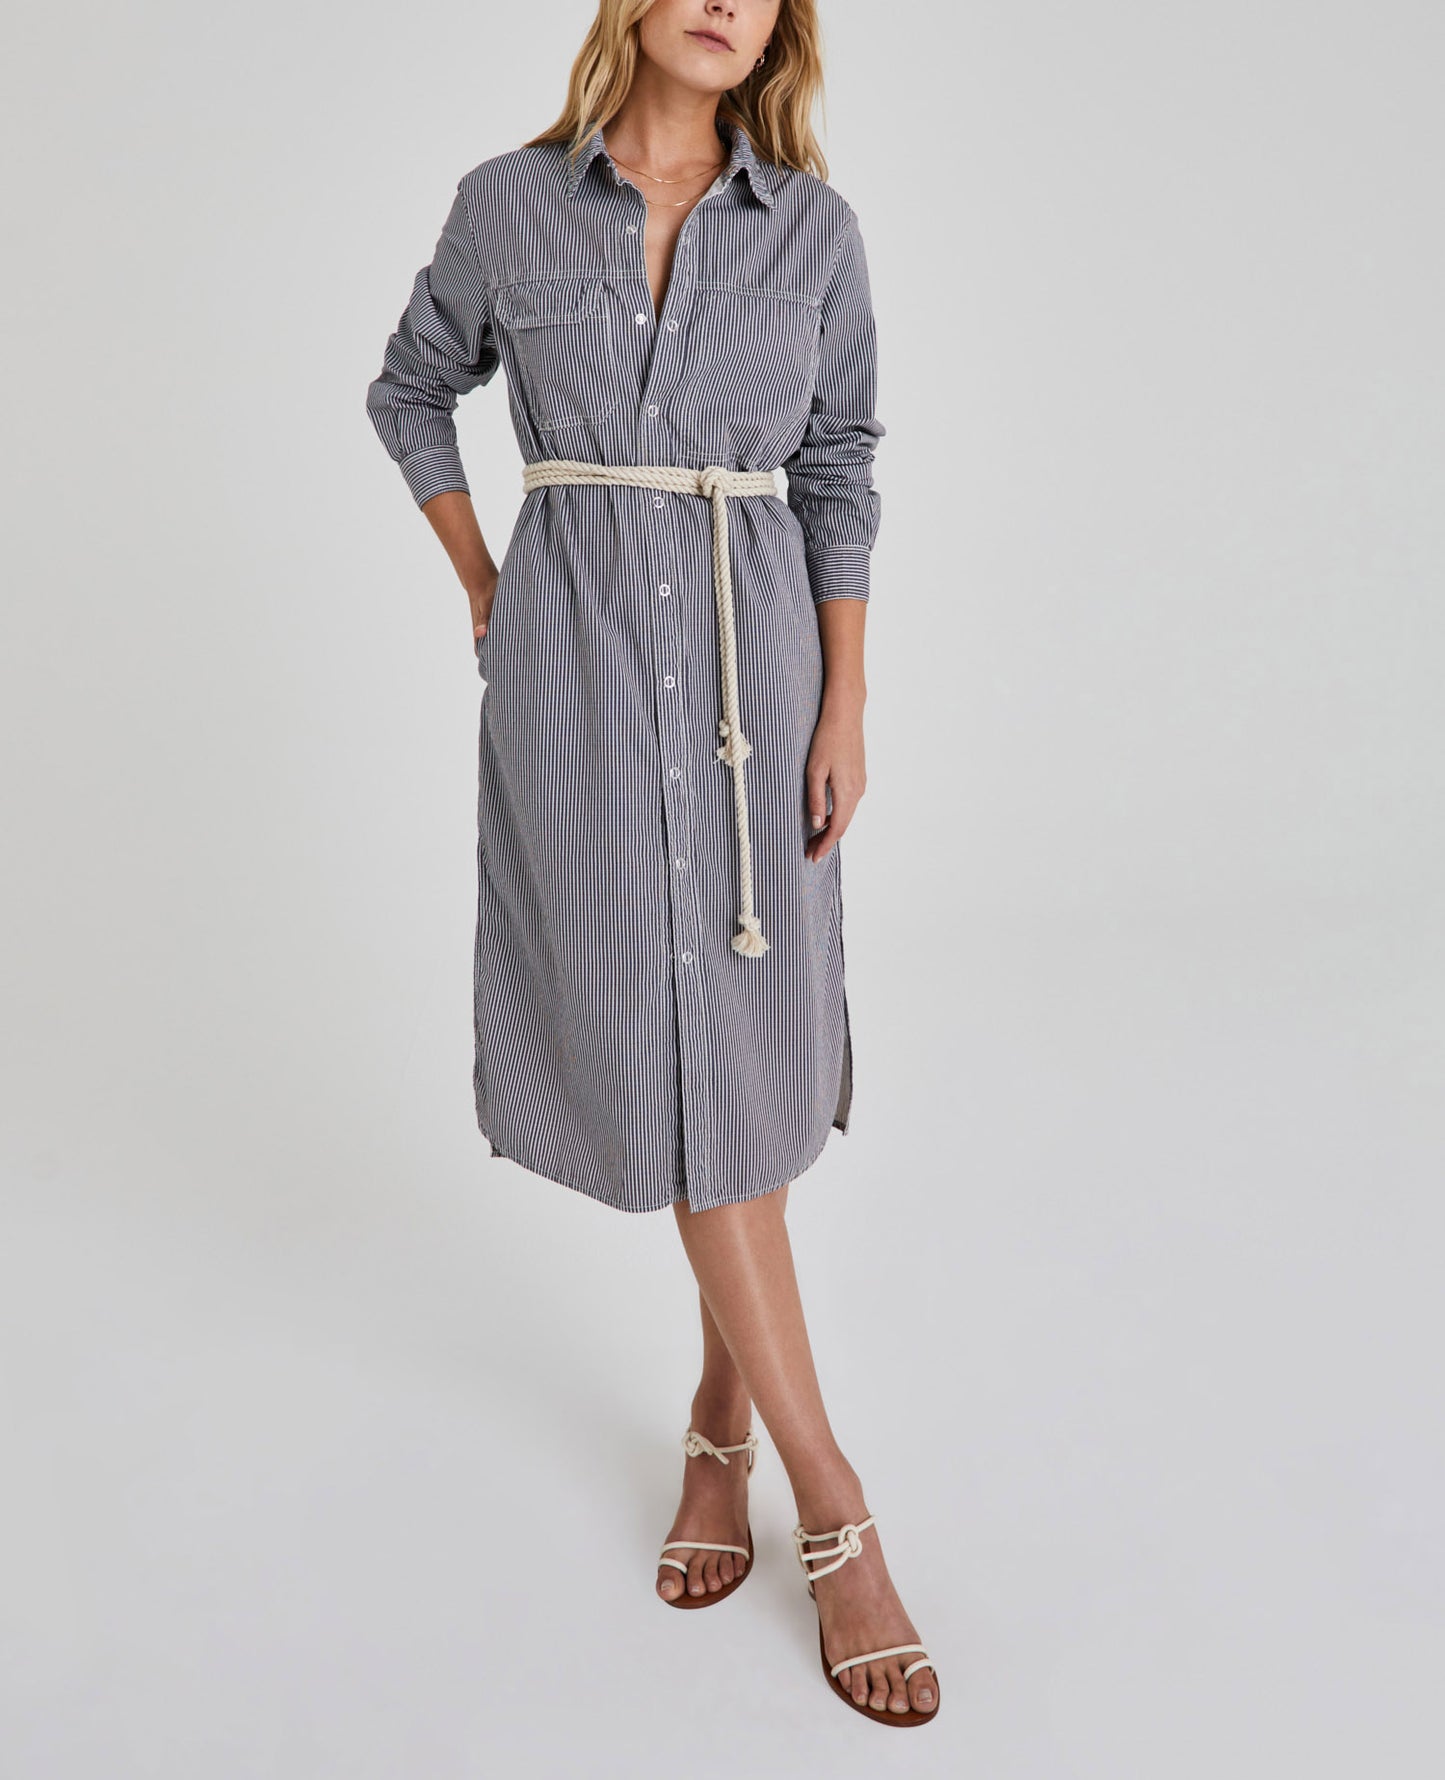 Taylor Dress Carlisle Stripe-Indigo Workwear Dress Women Onepiece Photo 3